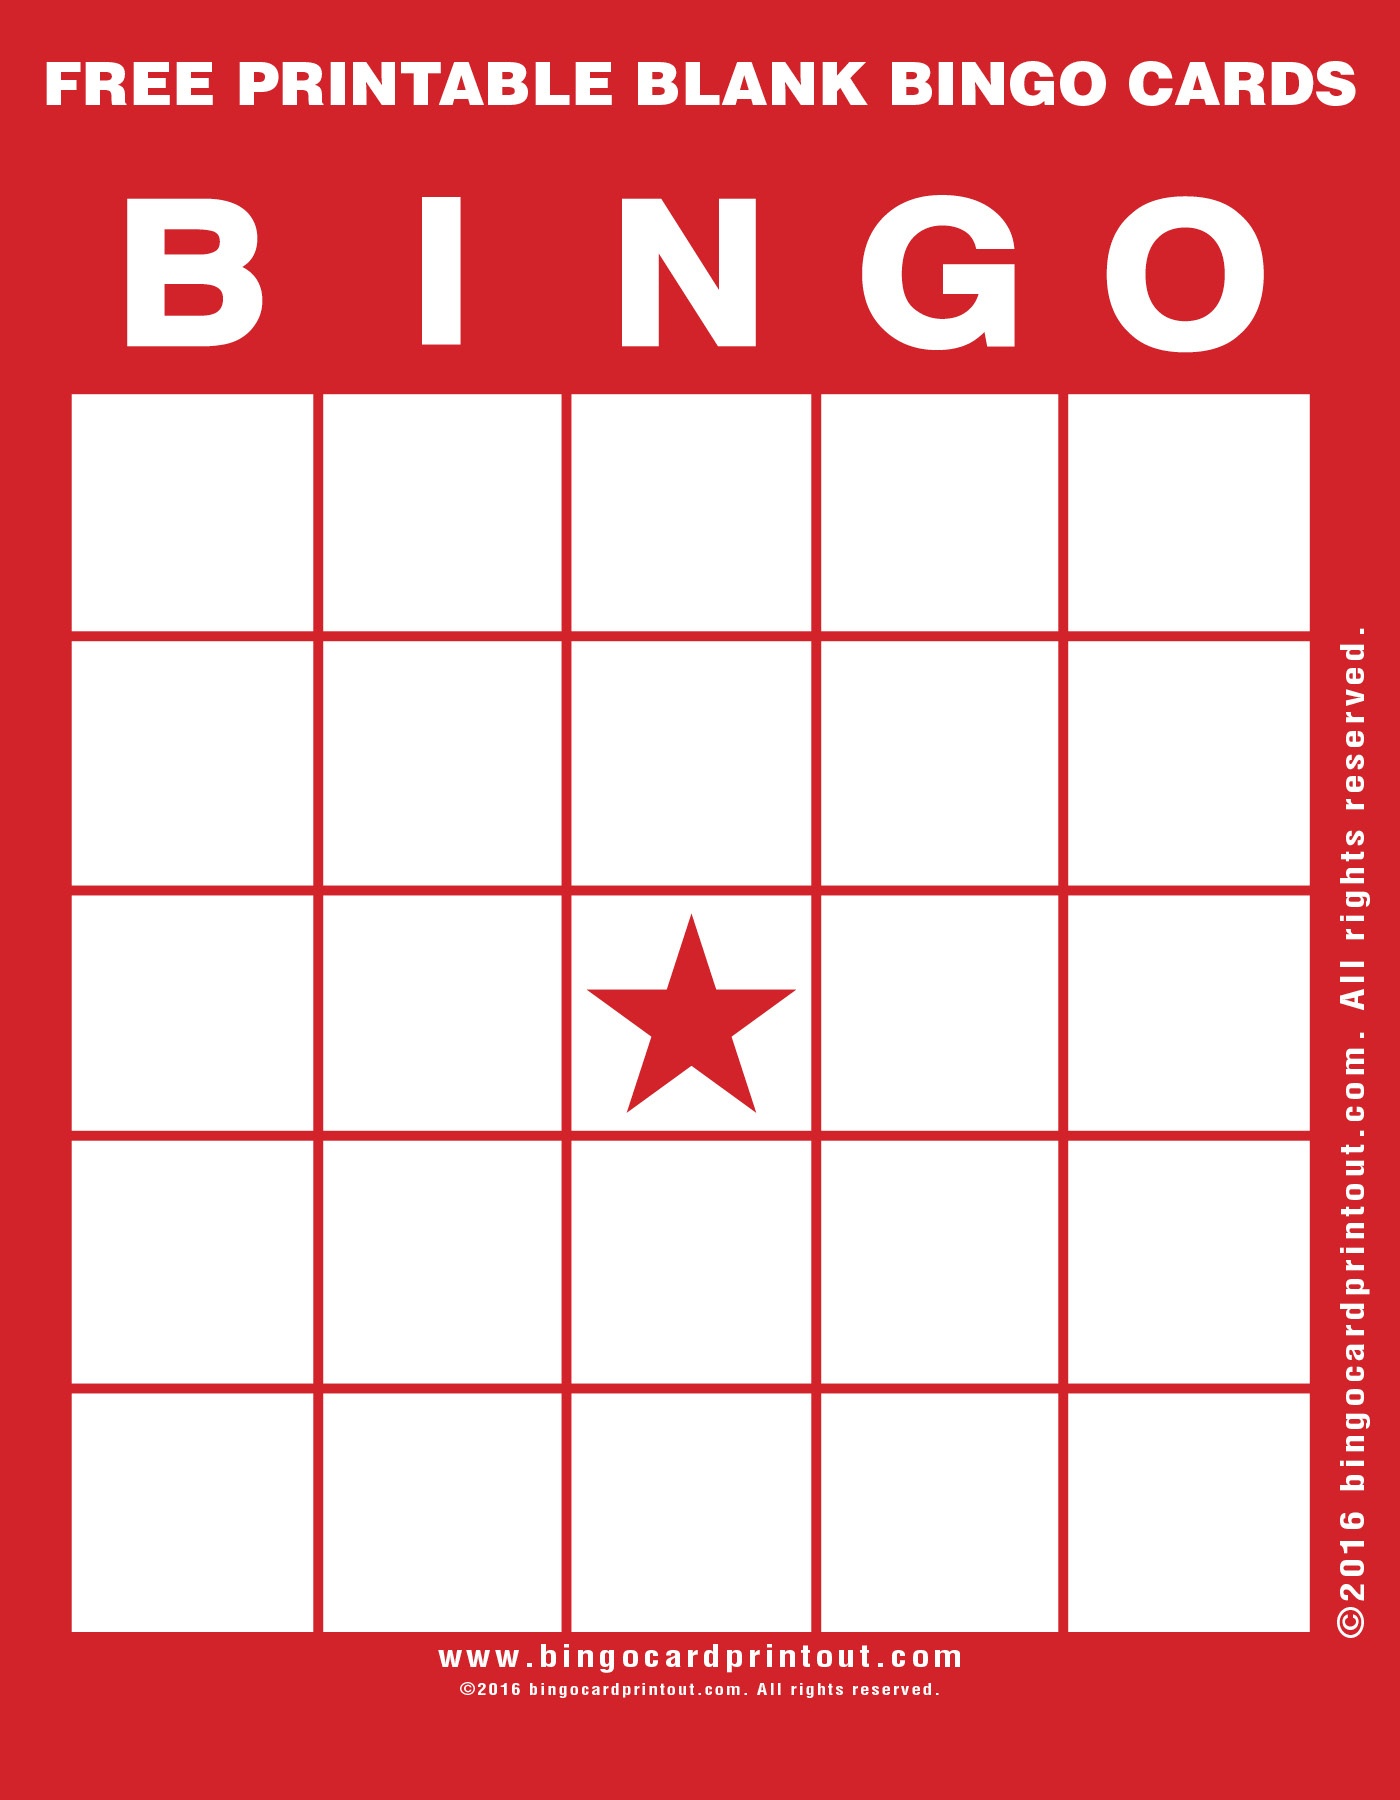 Free Printable Blank Bingo Cards - Bingocardprintout - Free Printable Blank Bingo Cards